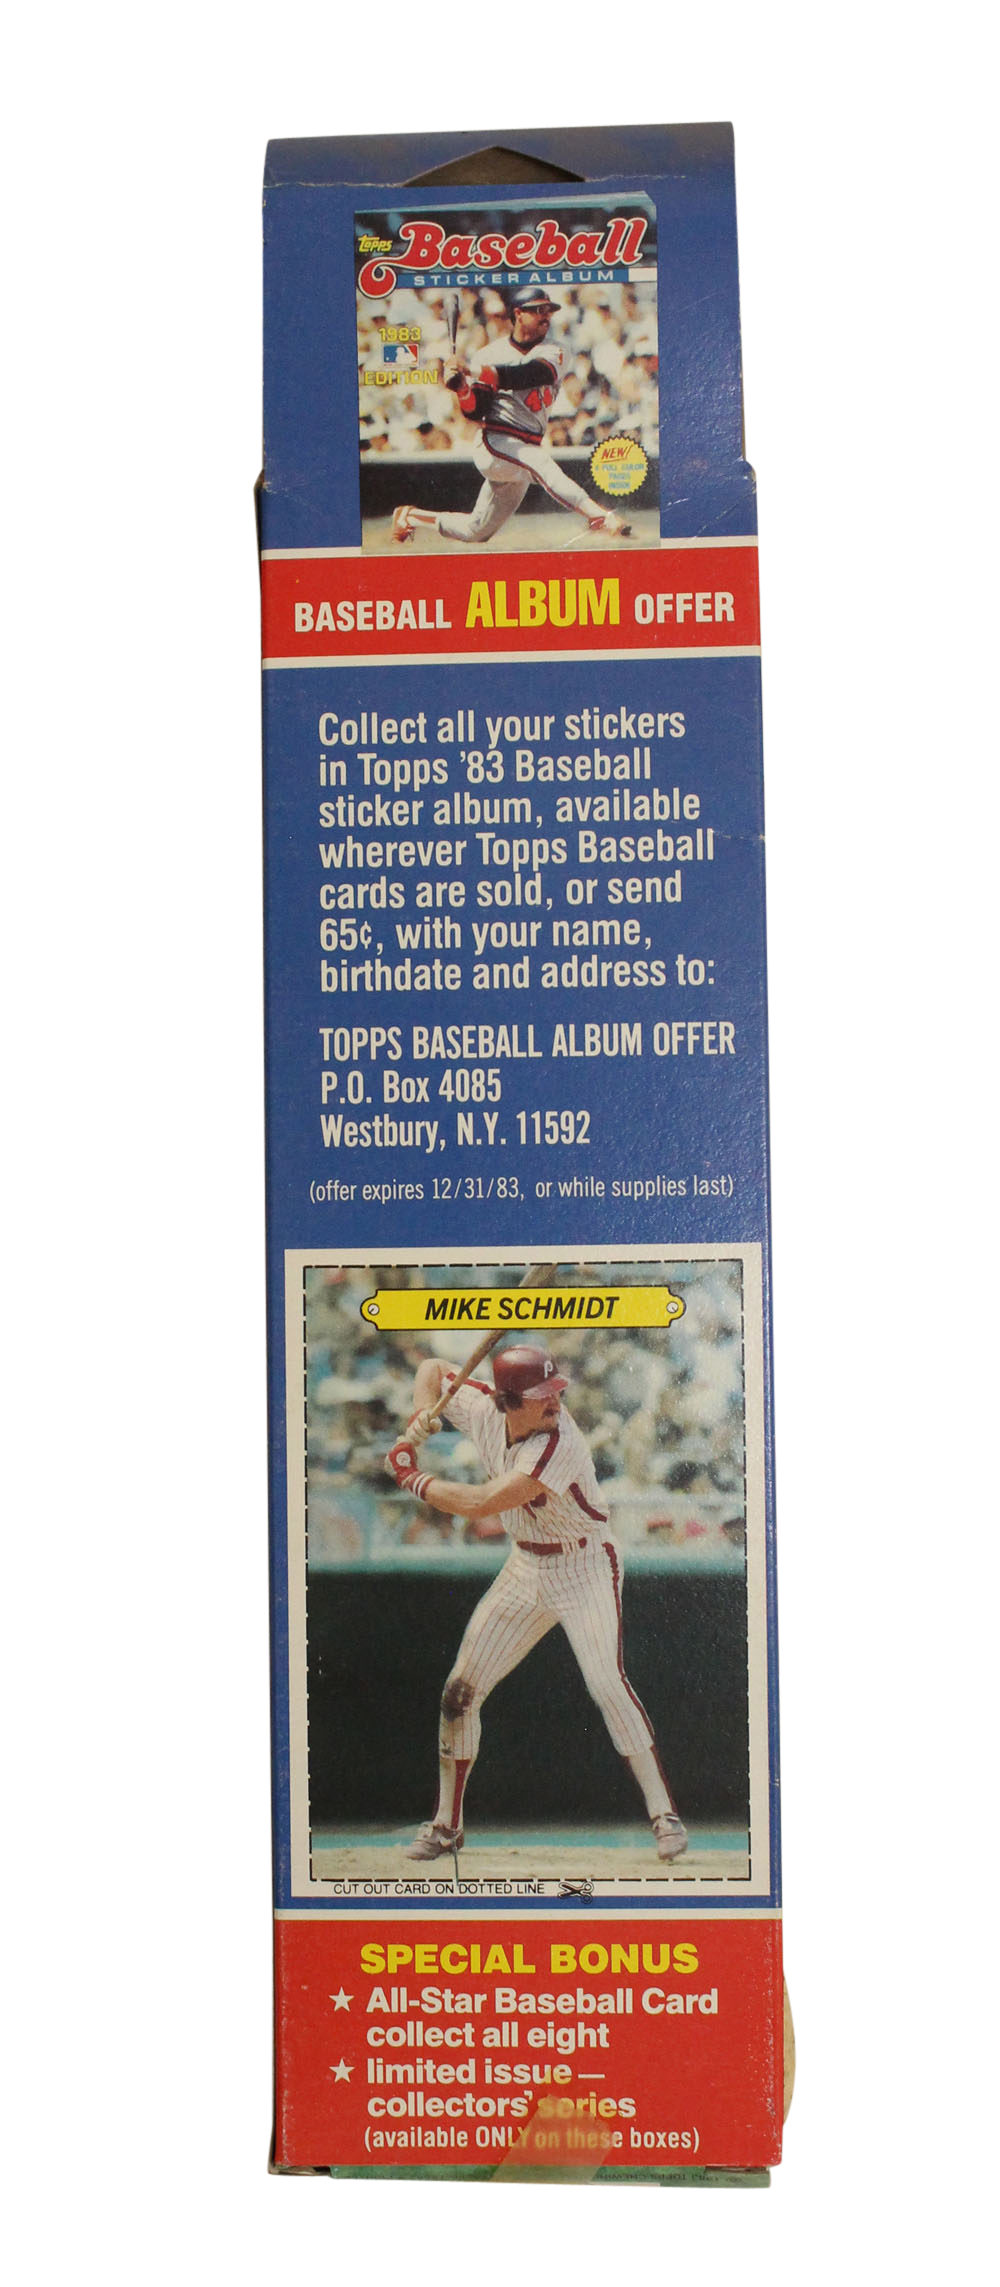 1983 MLB Album Stickers Set #3 30 Stickers